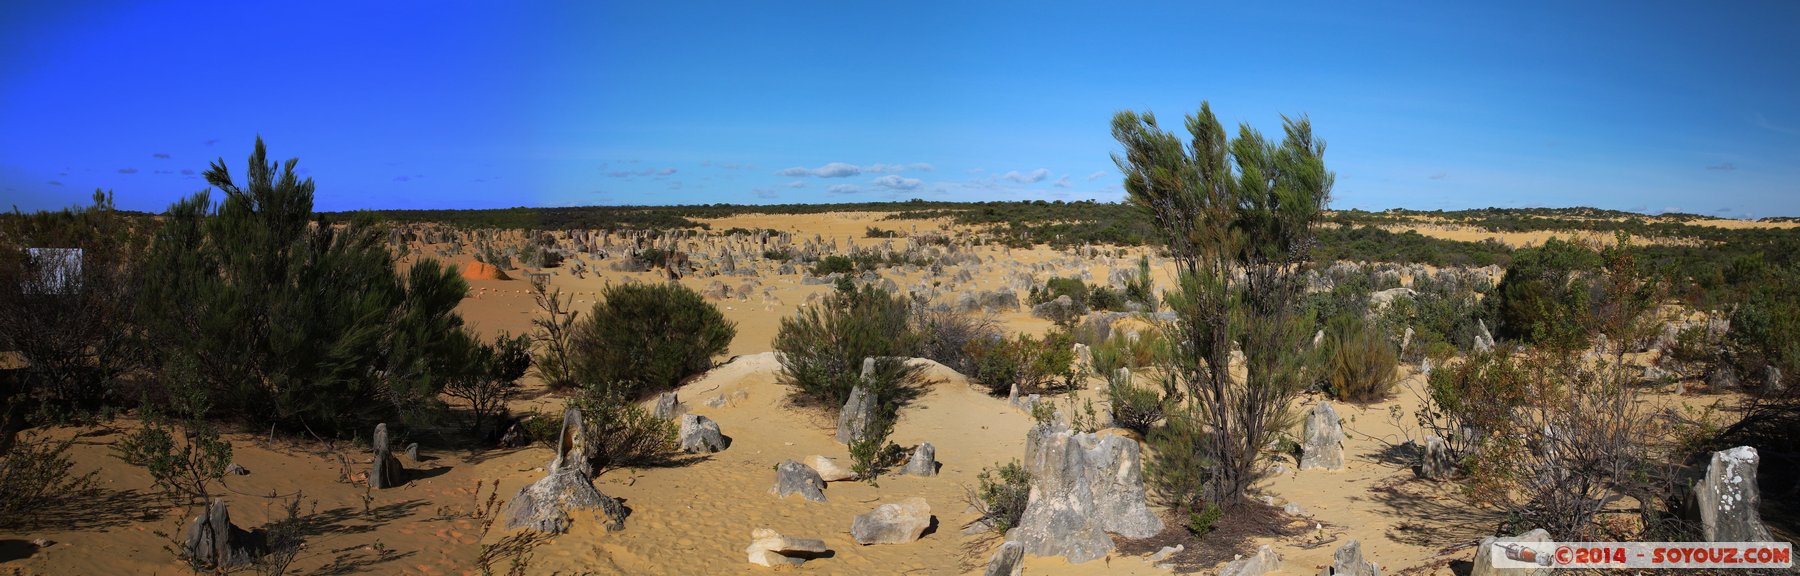 Nambung National Park  - The Pinnacles - Panorama
Stitched Panorama
Mots-clés: AUS Australie Cervantes geo:lat=-30.60305200 geo:lon=115.15681800 geotagged Western Australia Parc paysage panorama